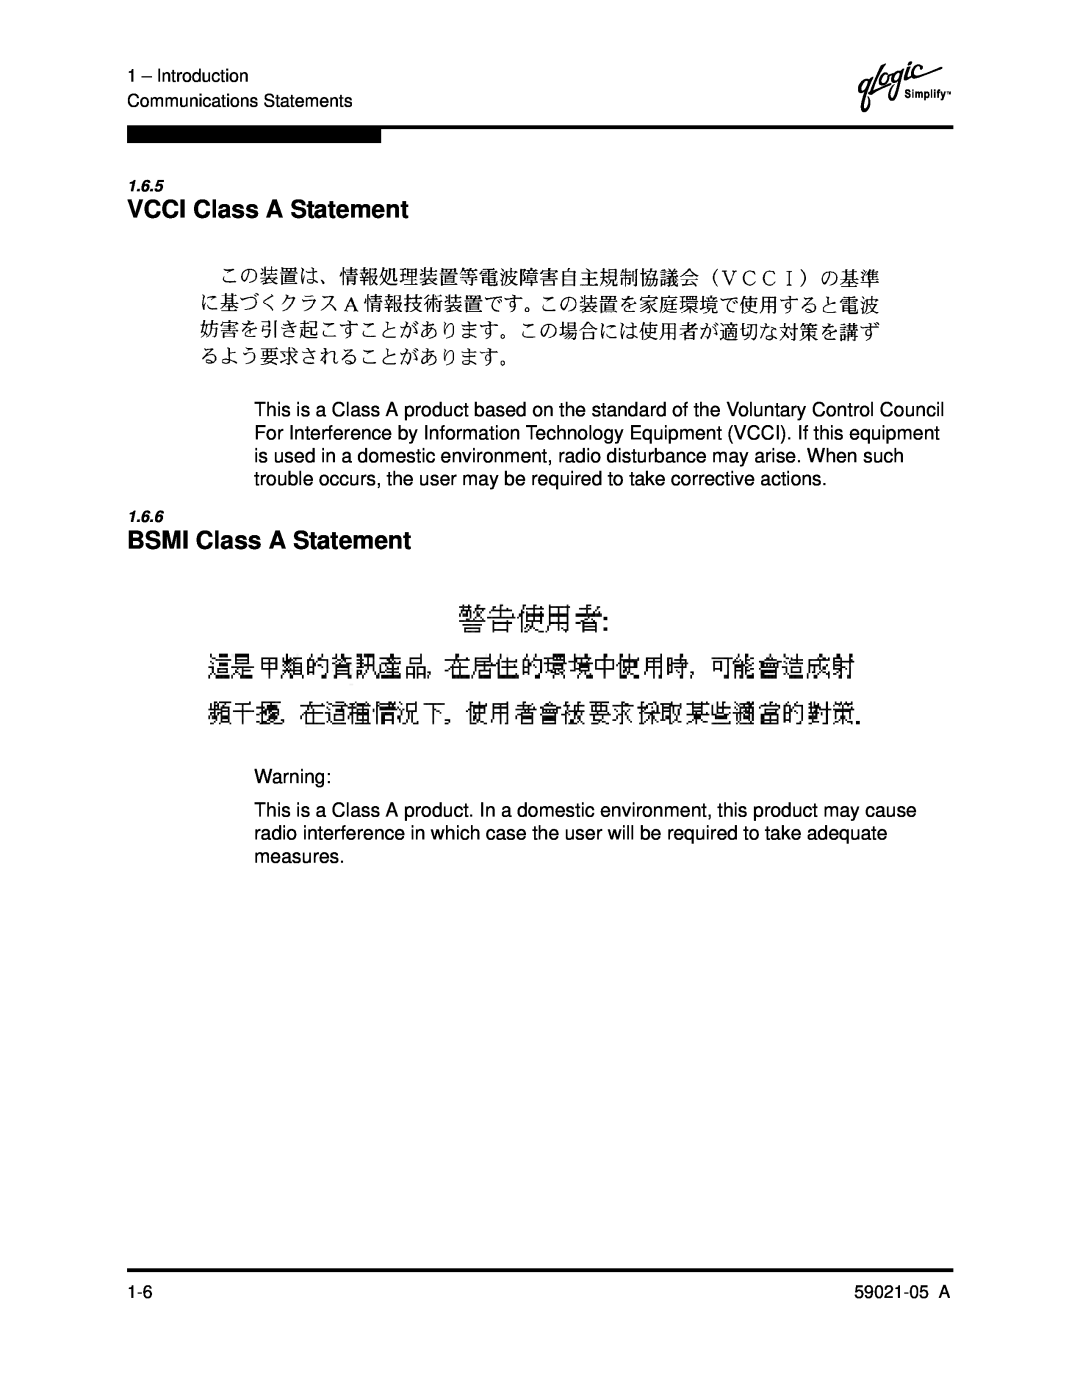 Q-Logic 59021-05 manual VCCI Class A Statement, BSMI Class A Statement 